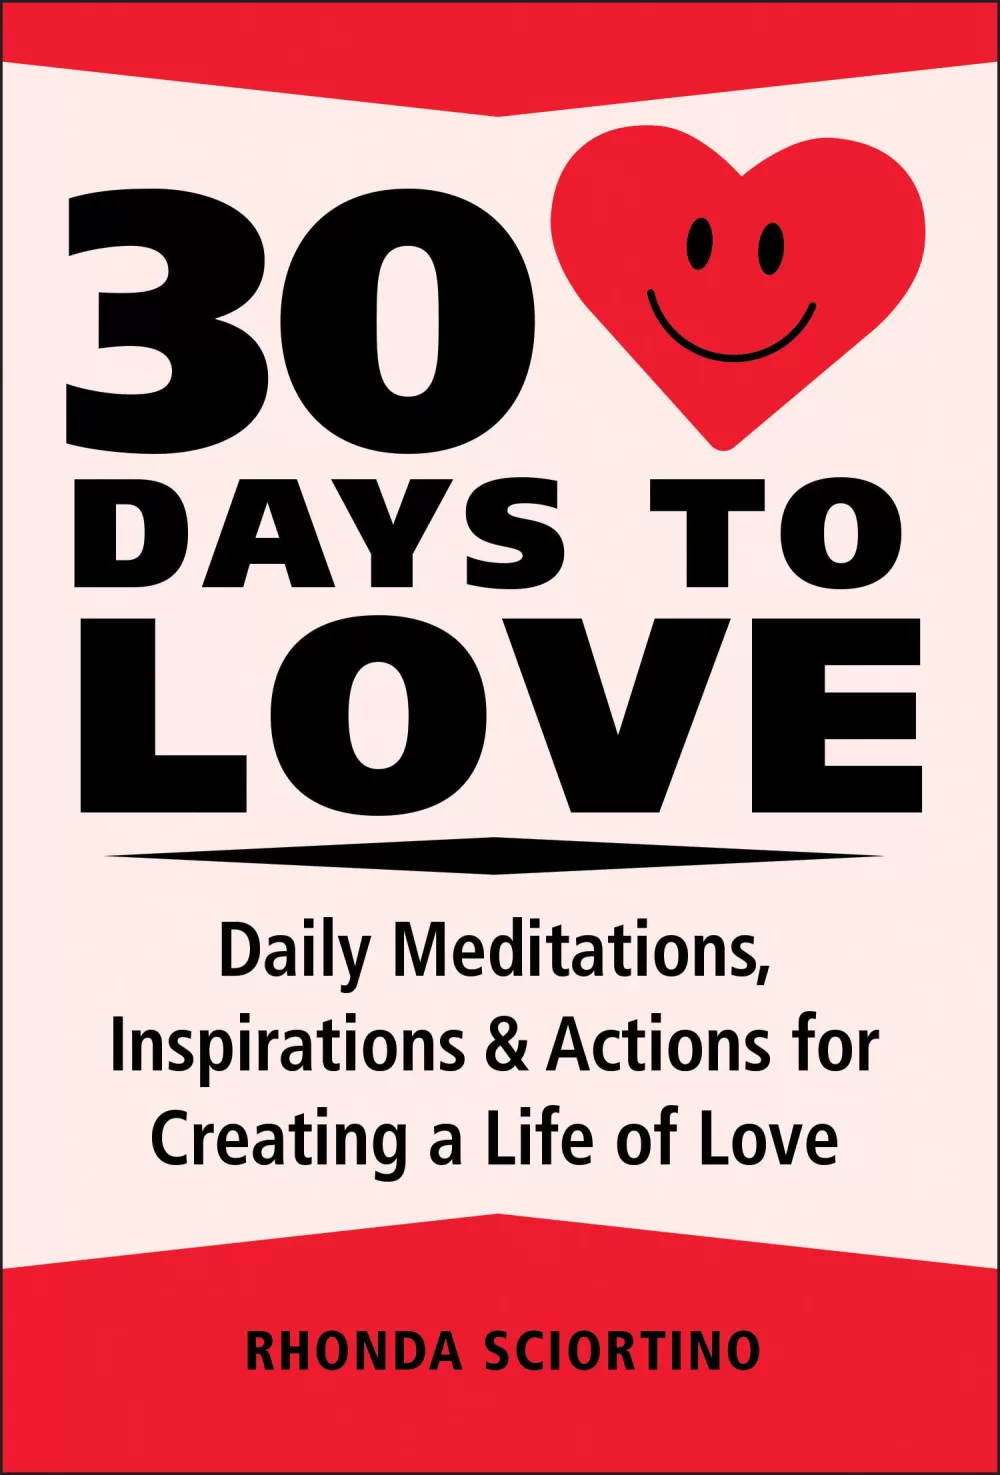 30 days to Love by Rhonda Sciortino